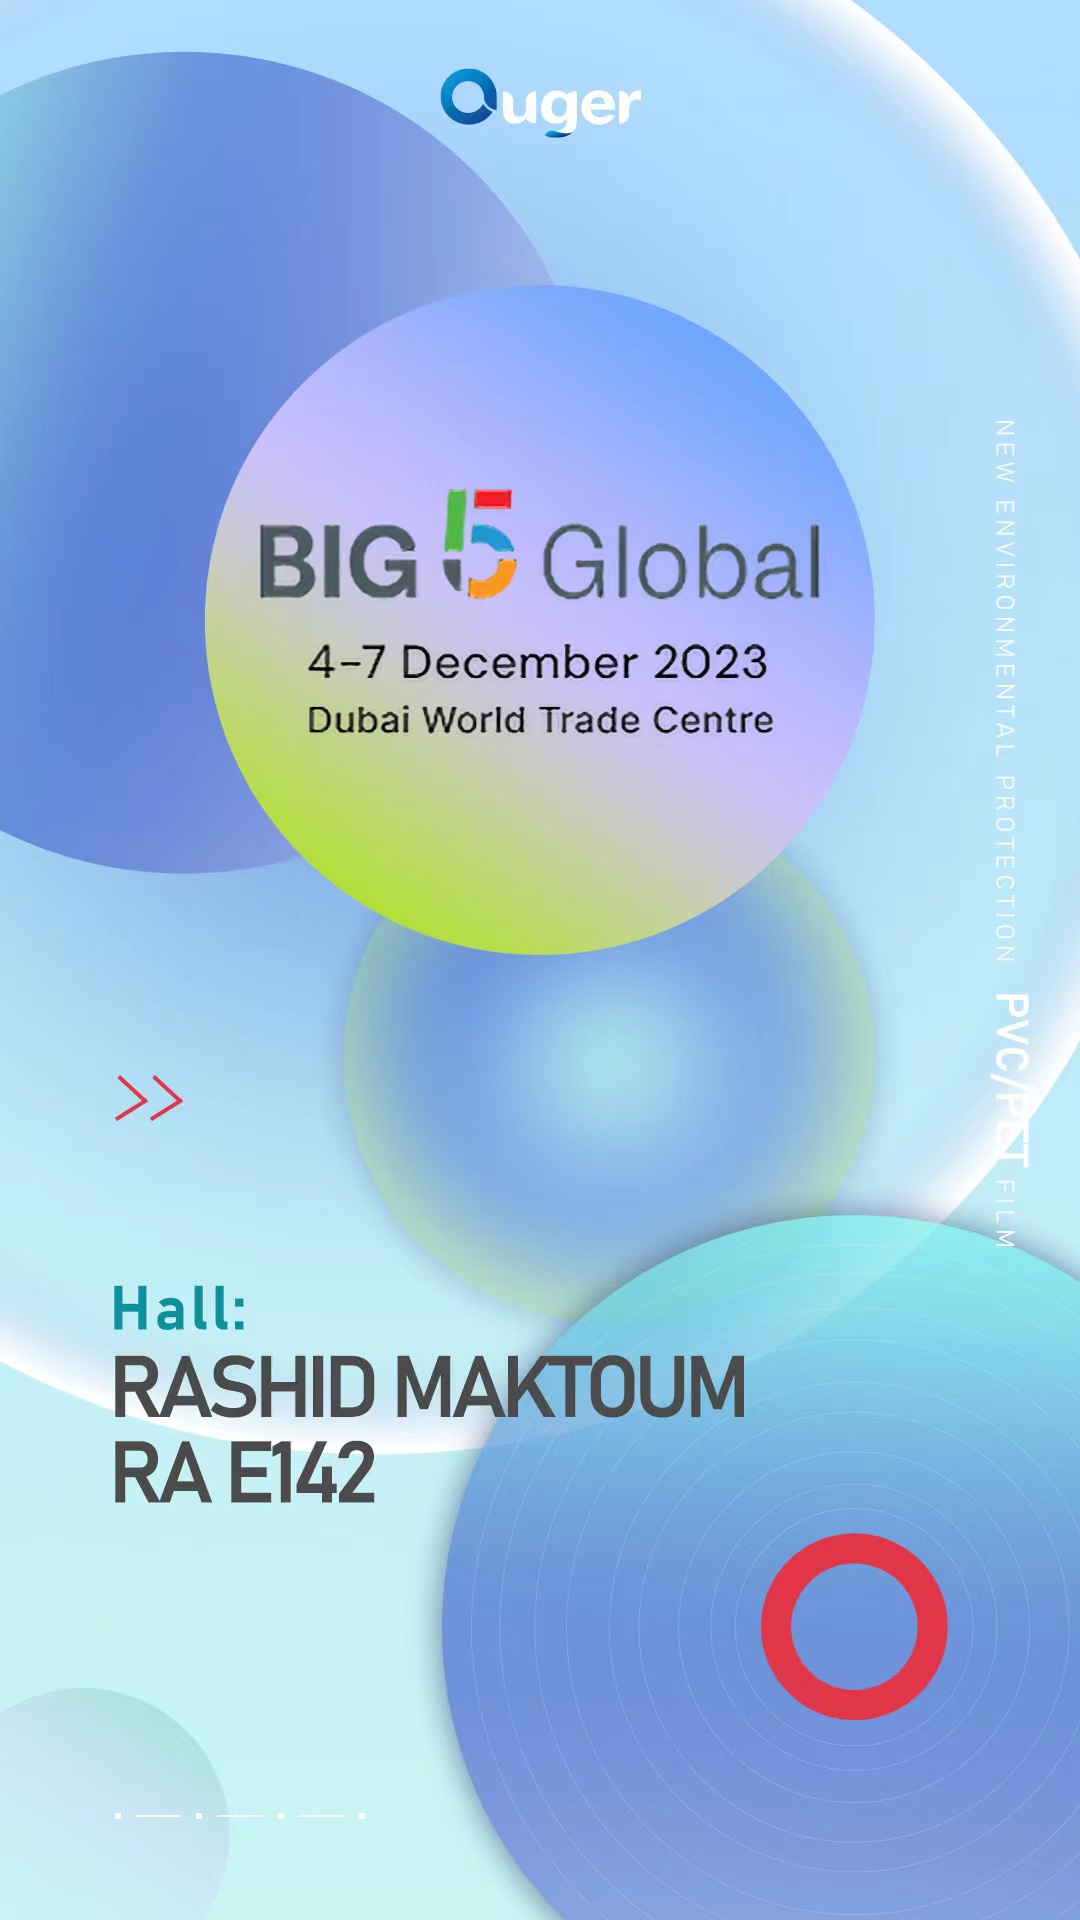 BIG 5 Global 2023